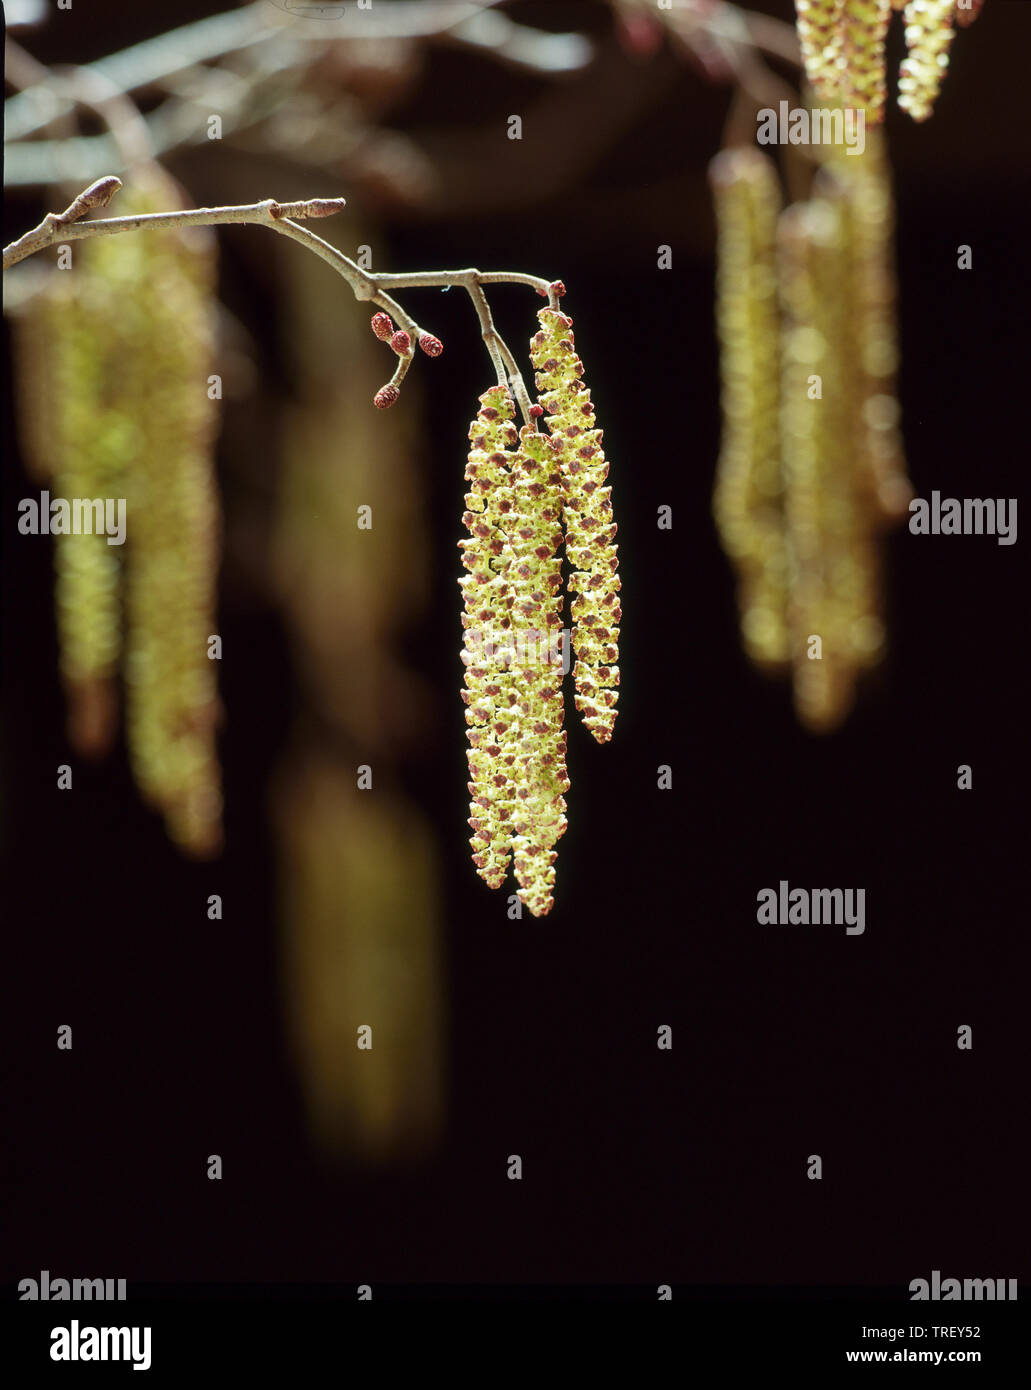 Common Alder, European Alder (Alnus glutinosa), twig with male and female inflorescences. Stock Photo